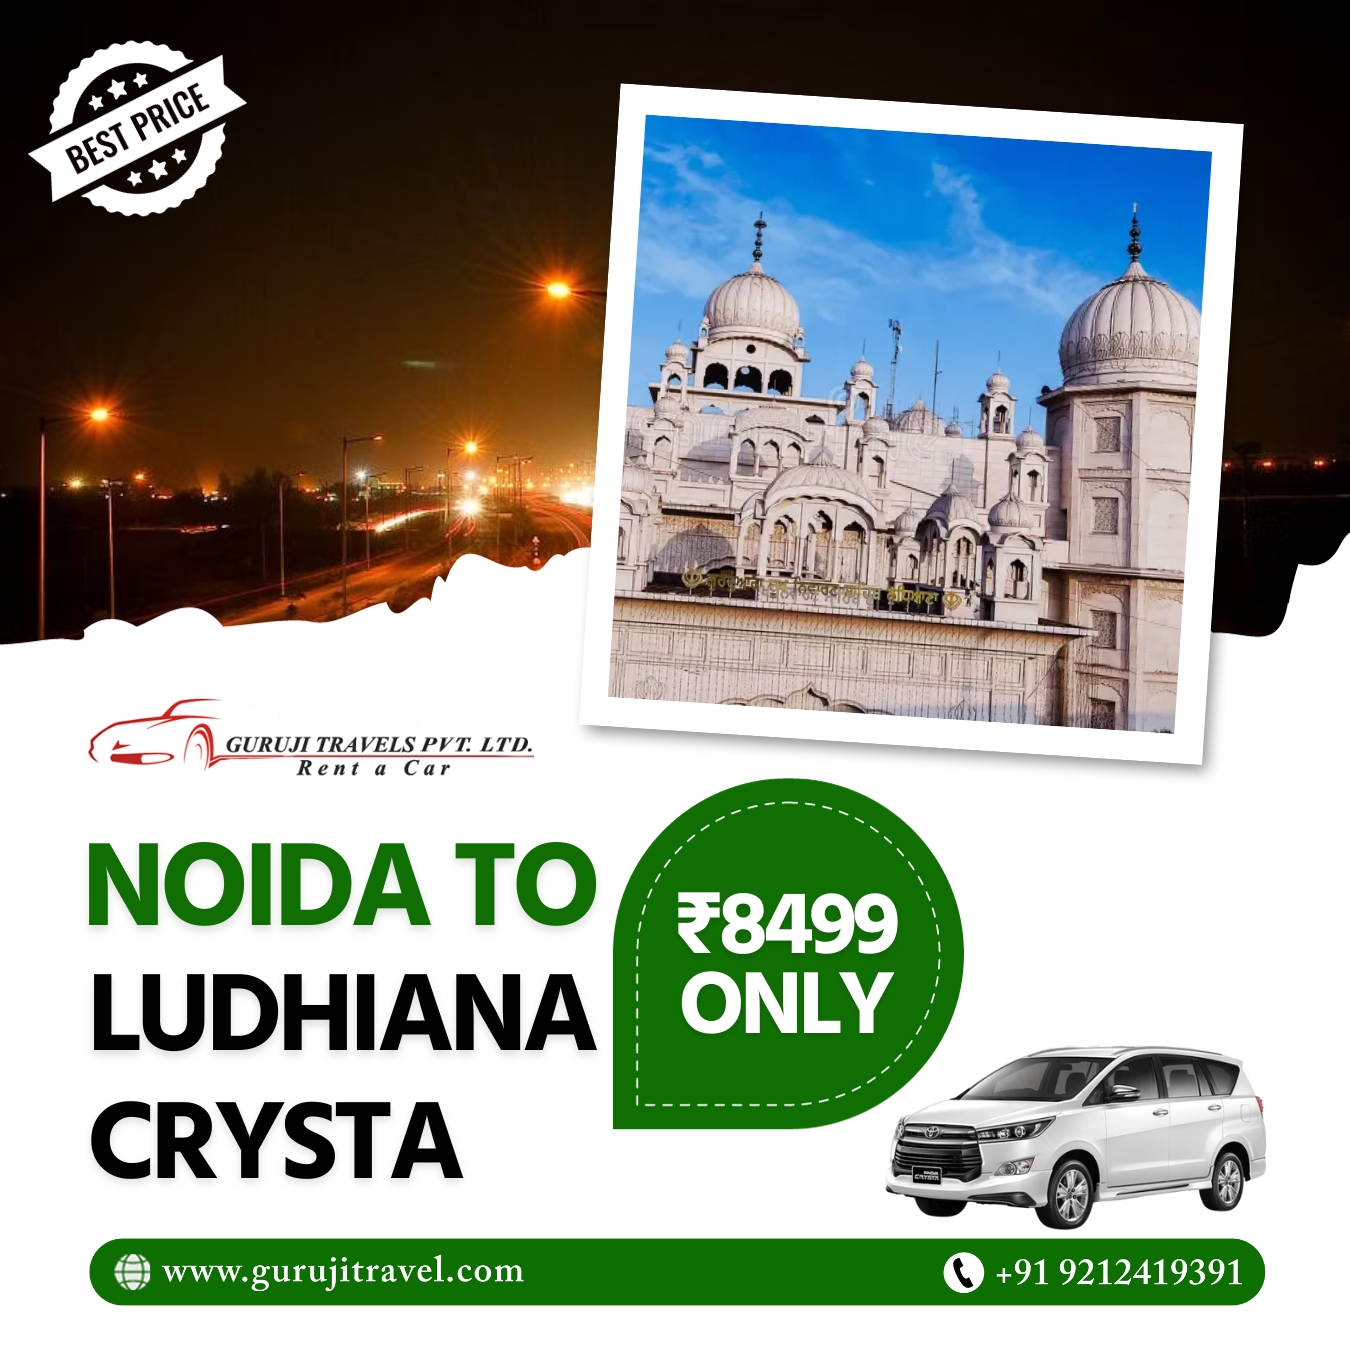 Gurgaon to Ludhiana Taxi - Delhi - Delhi ID1541822